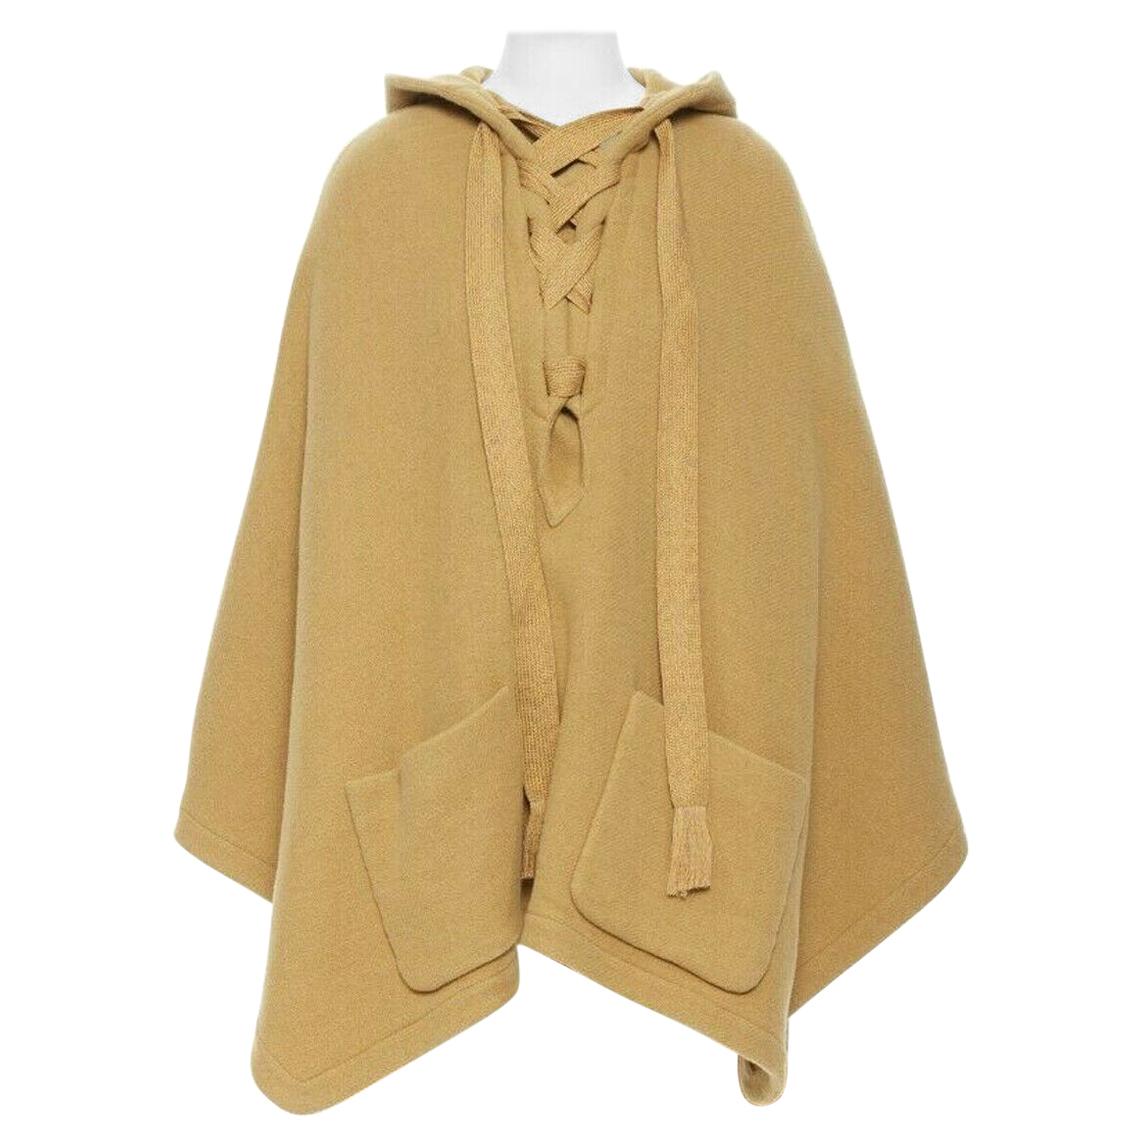 runway CHLOE 2017 virgin wool poncho cape gold khaki brown lace-up FR36 S